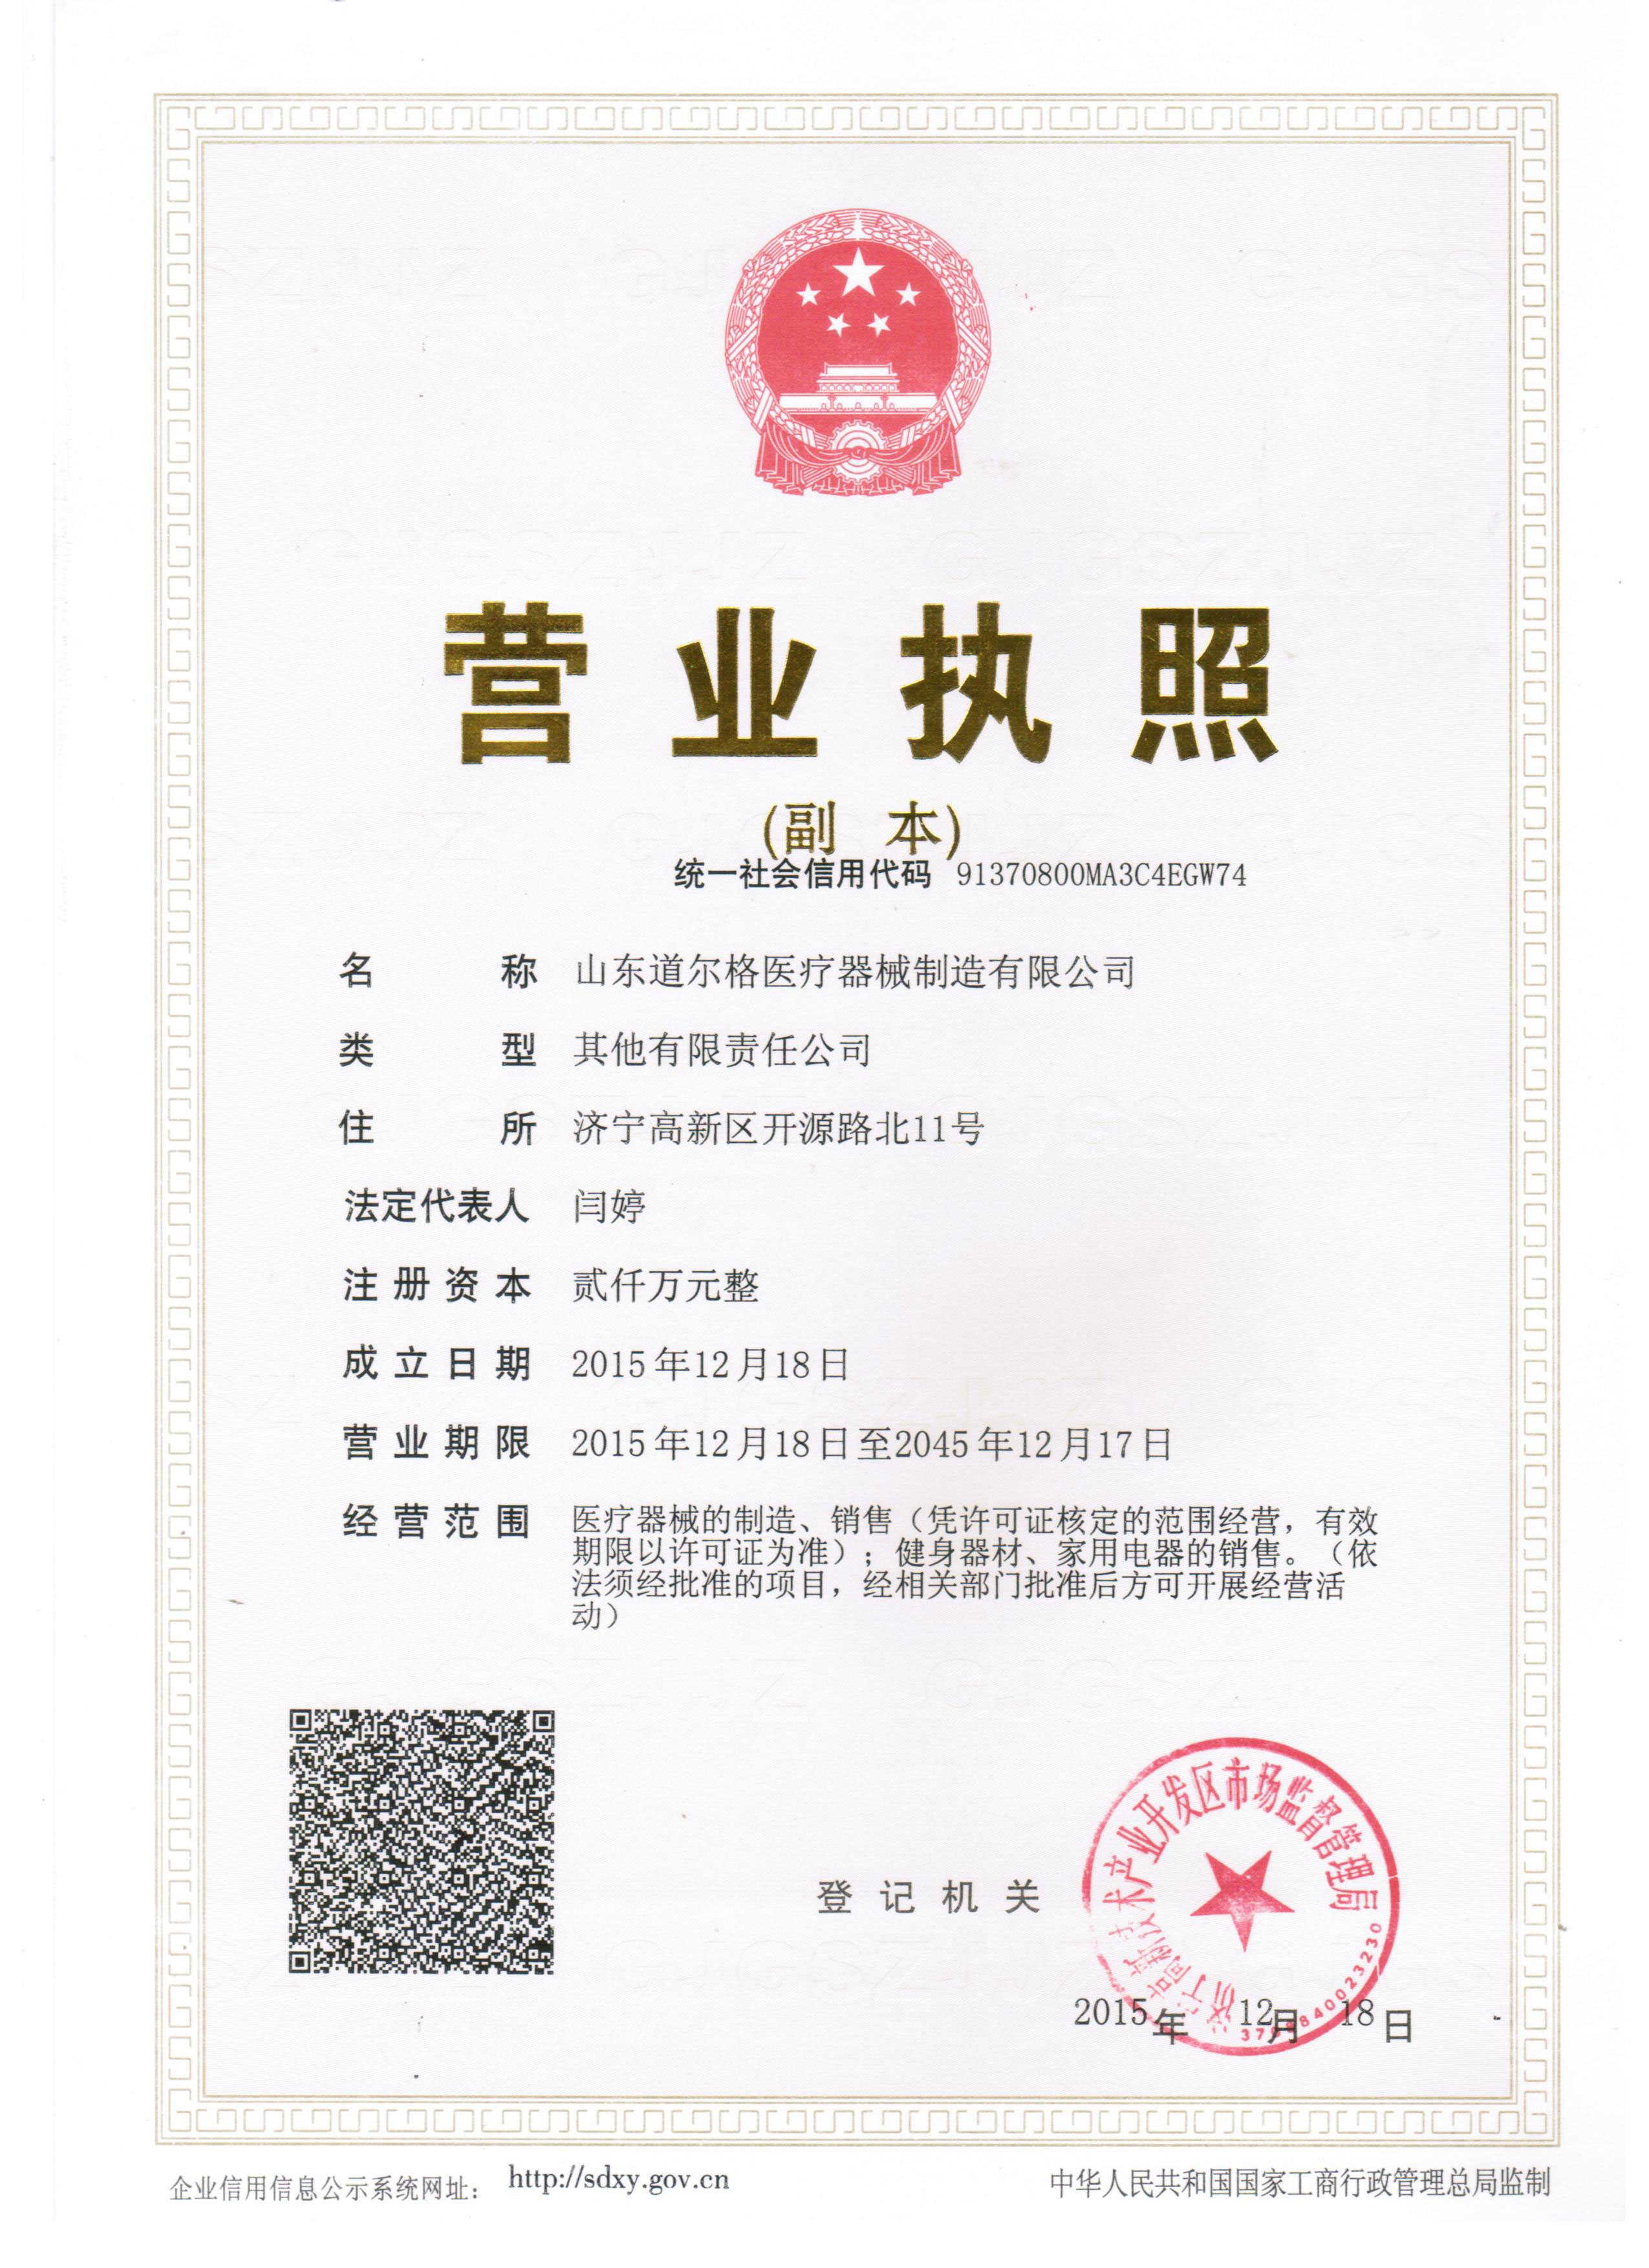 Successfully Registered Shandong Draeger Medical Instrument Manufacturing Co., Ltd.